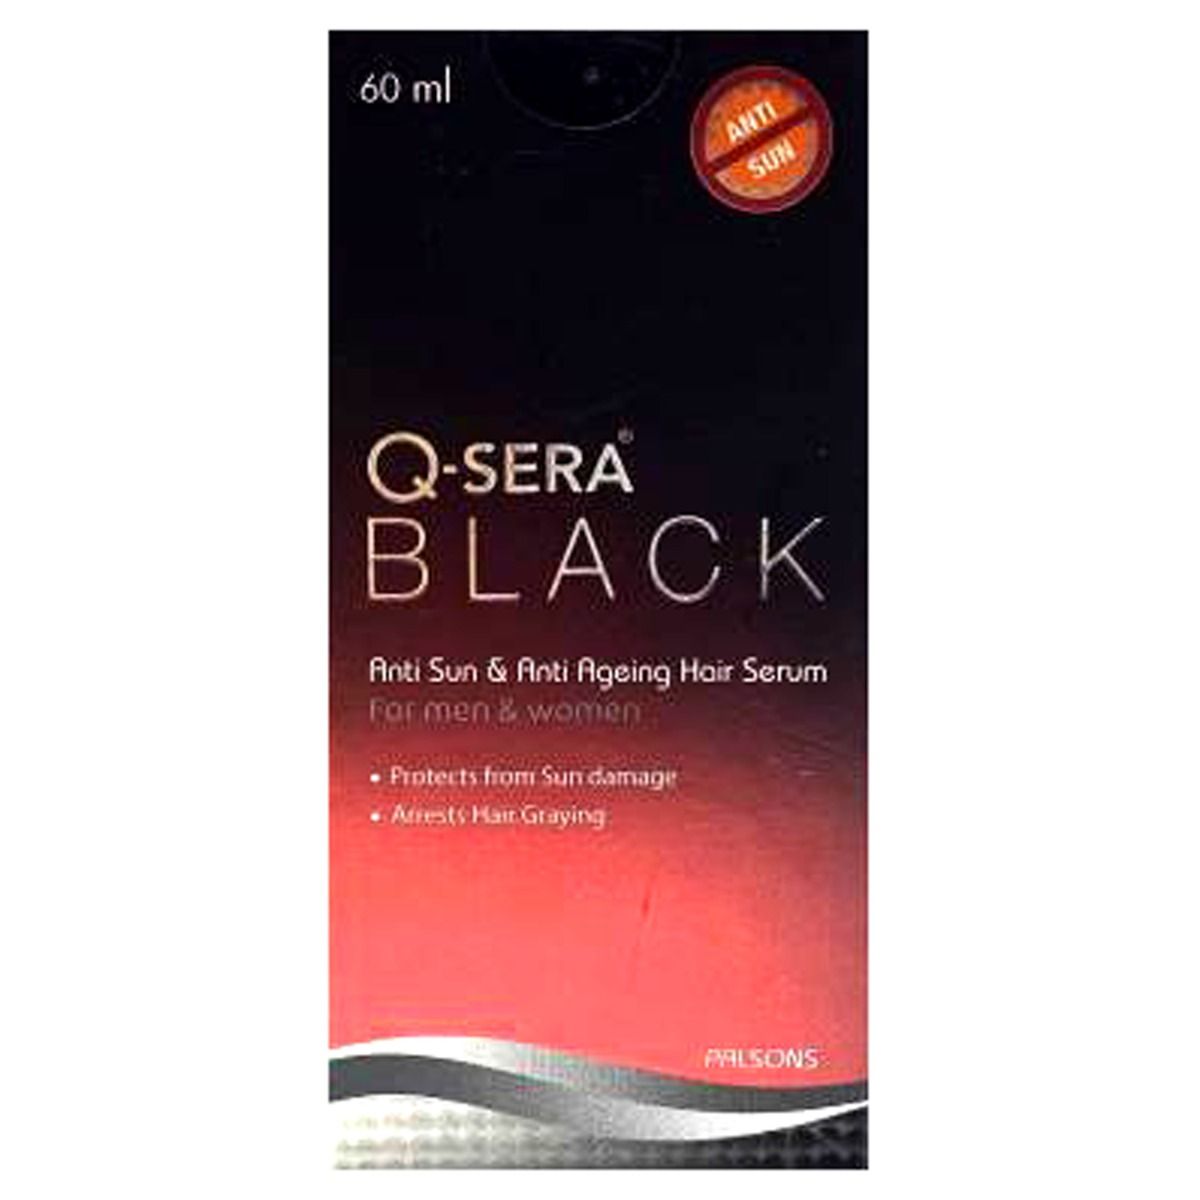 Q-Sera Black Hair Serum 60 ml Price, Uses, Side Effects, Composition -  Apollo Pharmacy